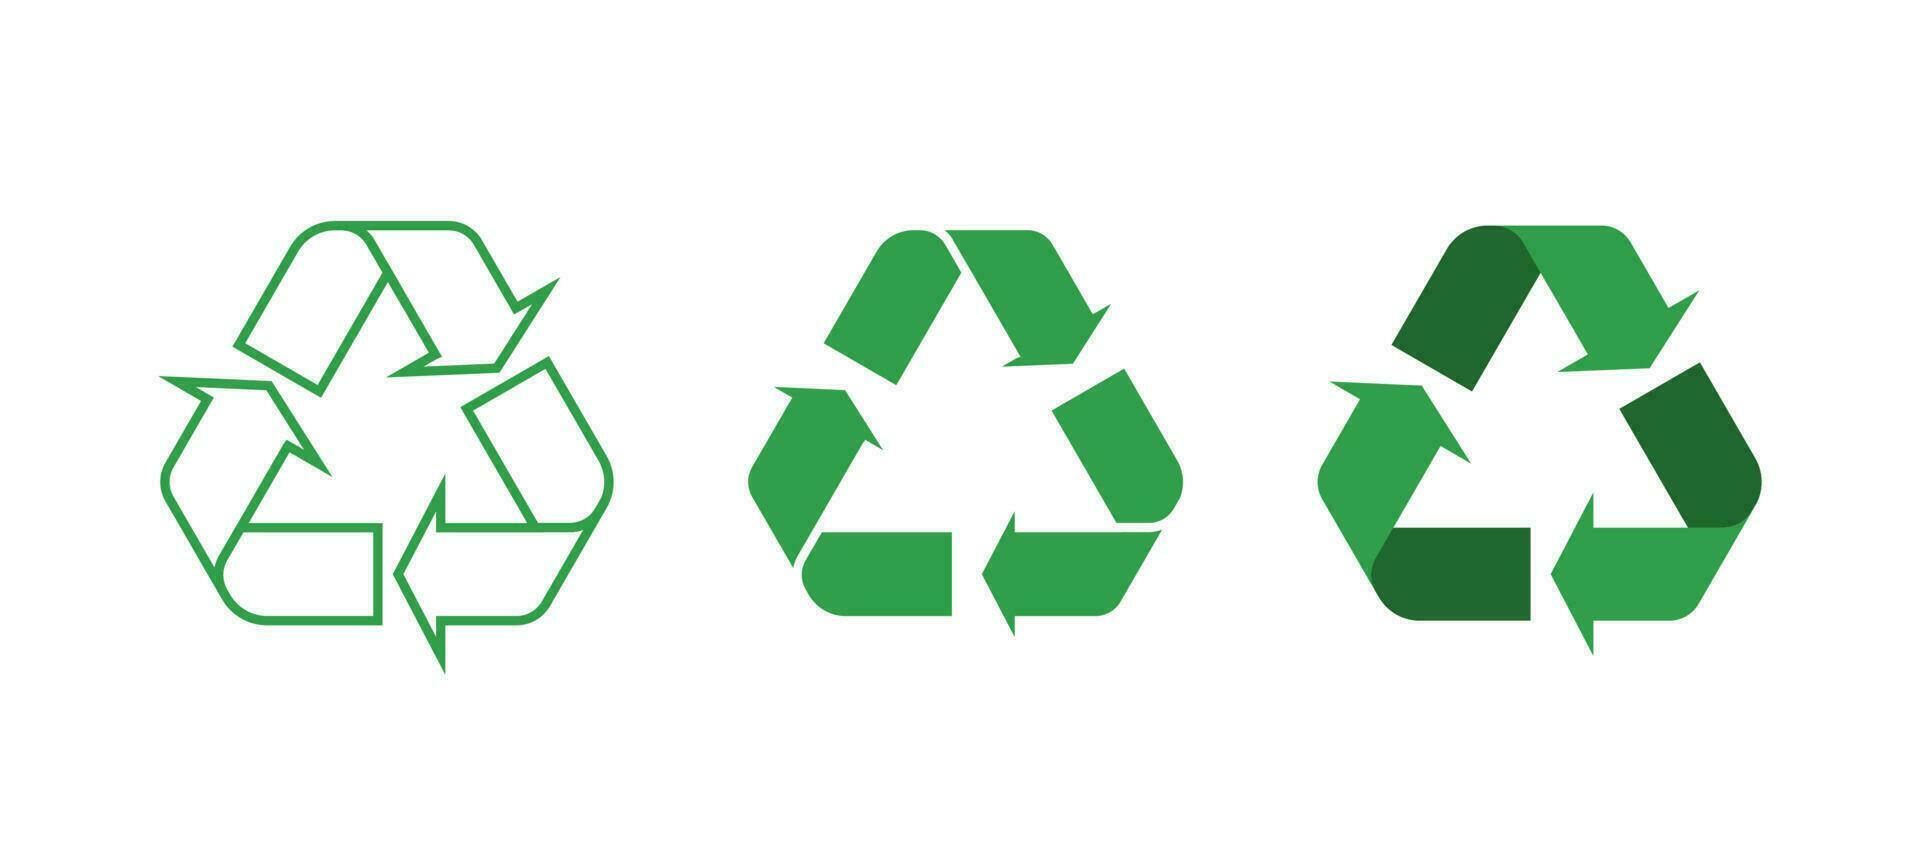 três verde reciclando símbolo ícones conjunto vetor